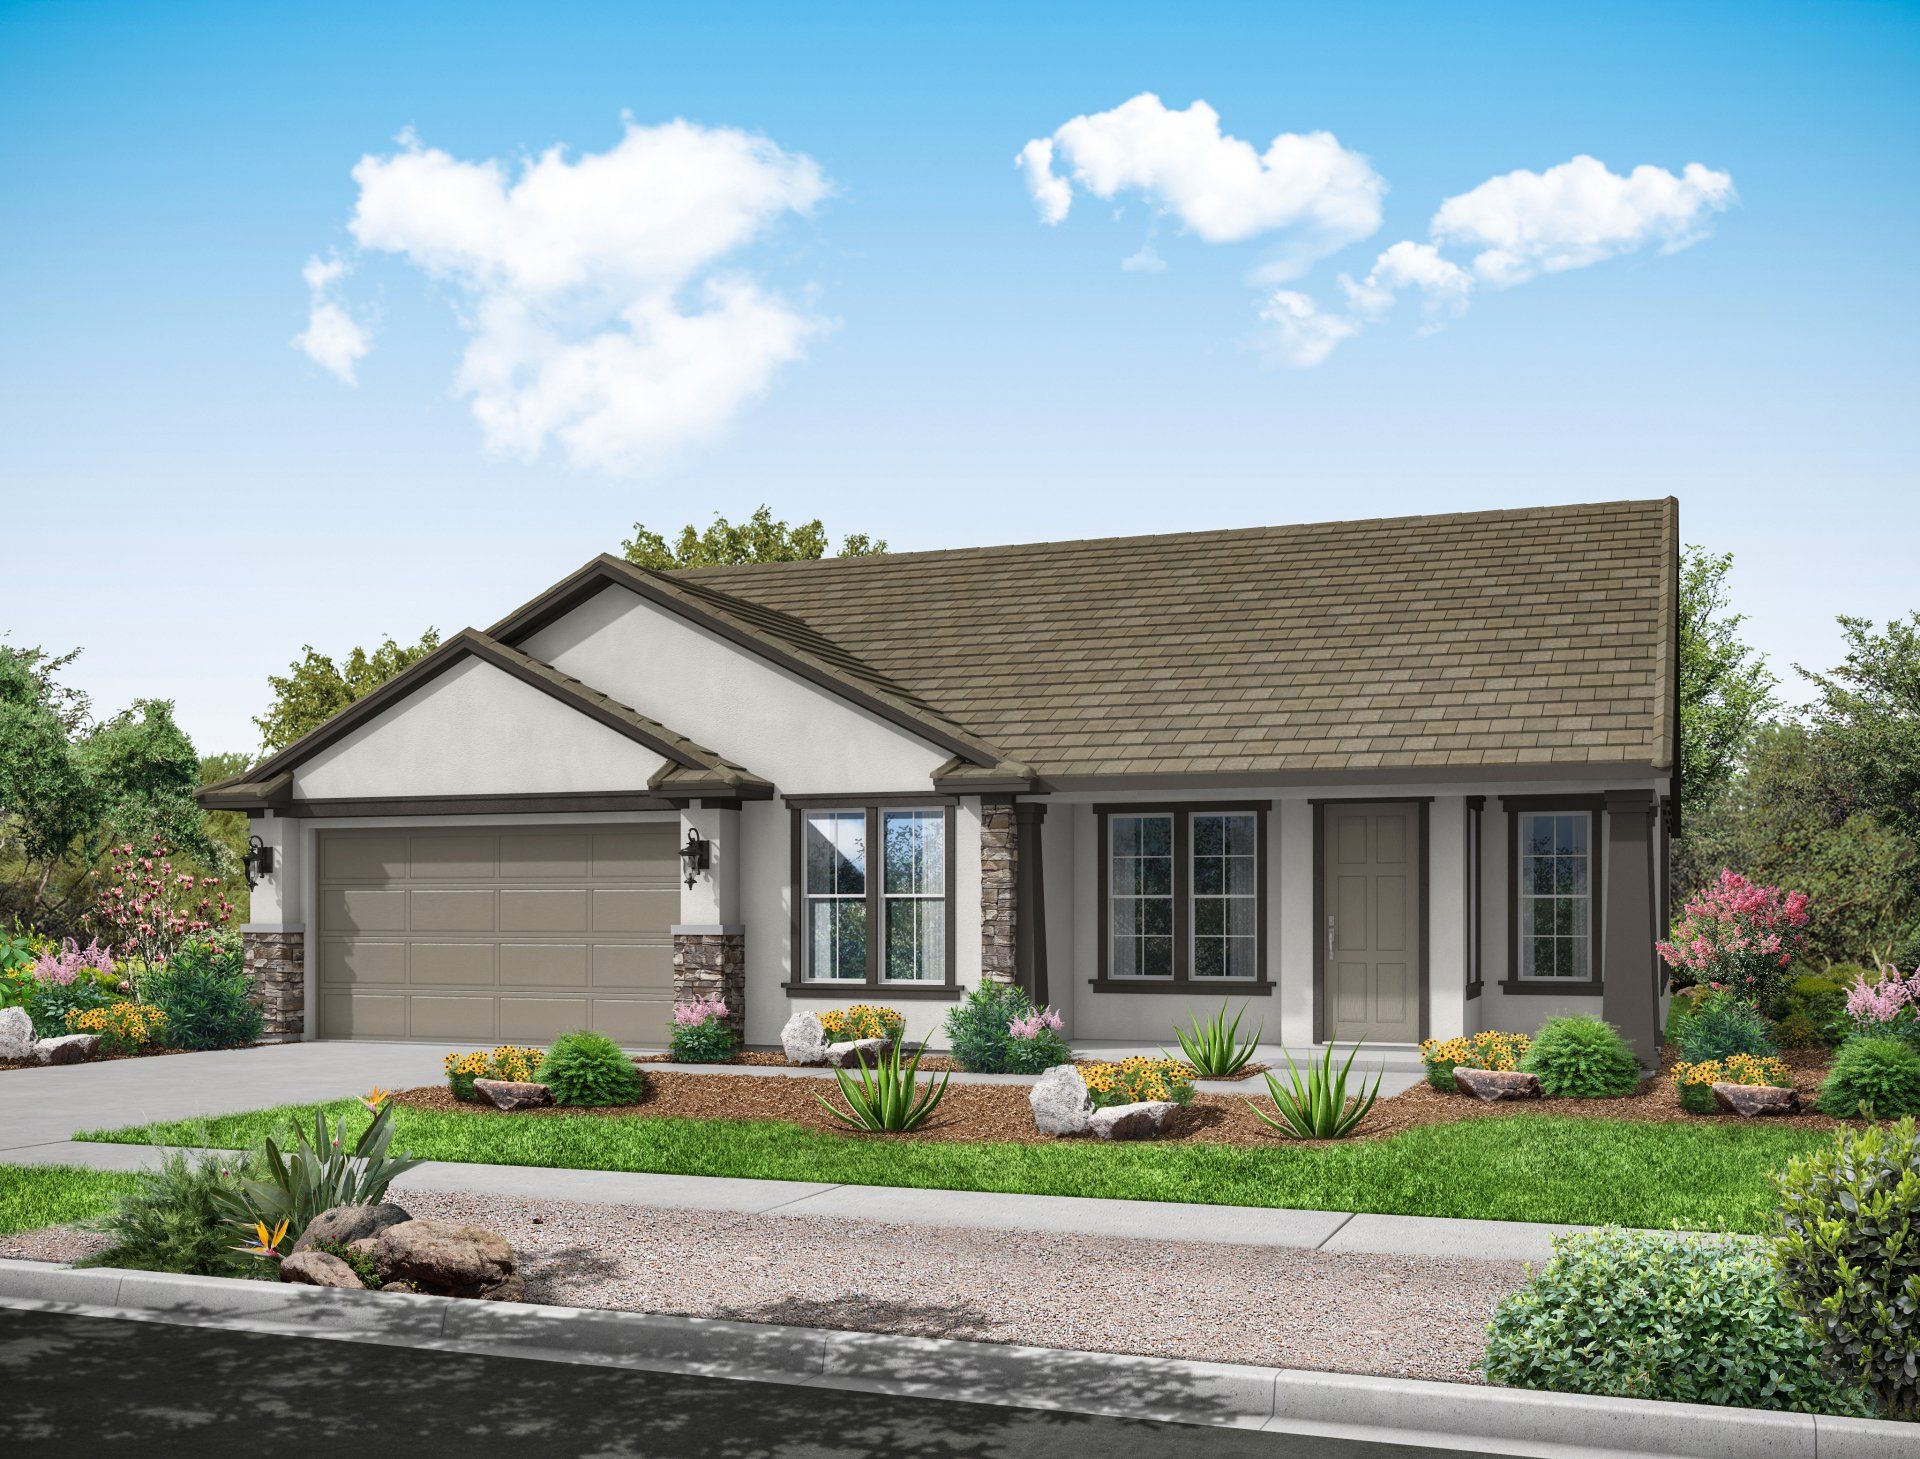 Elevation C Plan 2 | SCM Homes | Modesto, CA